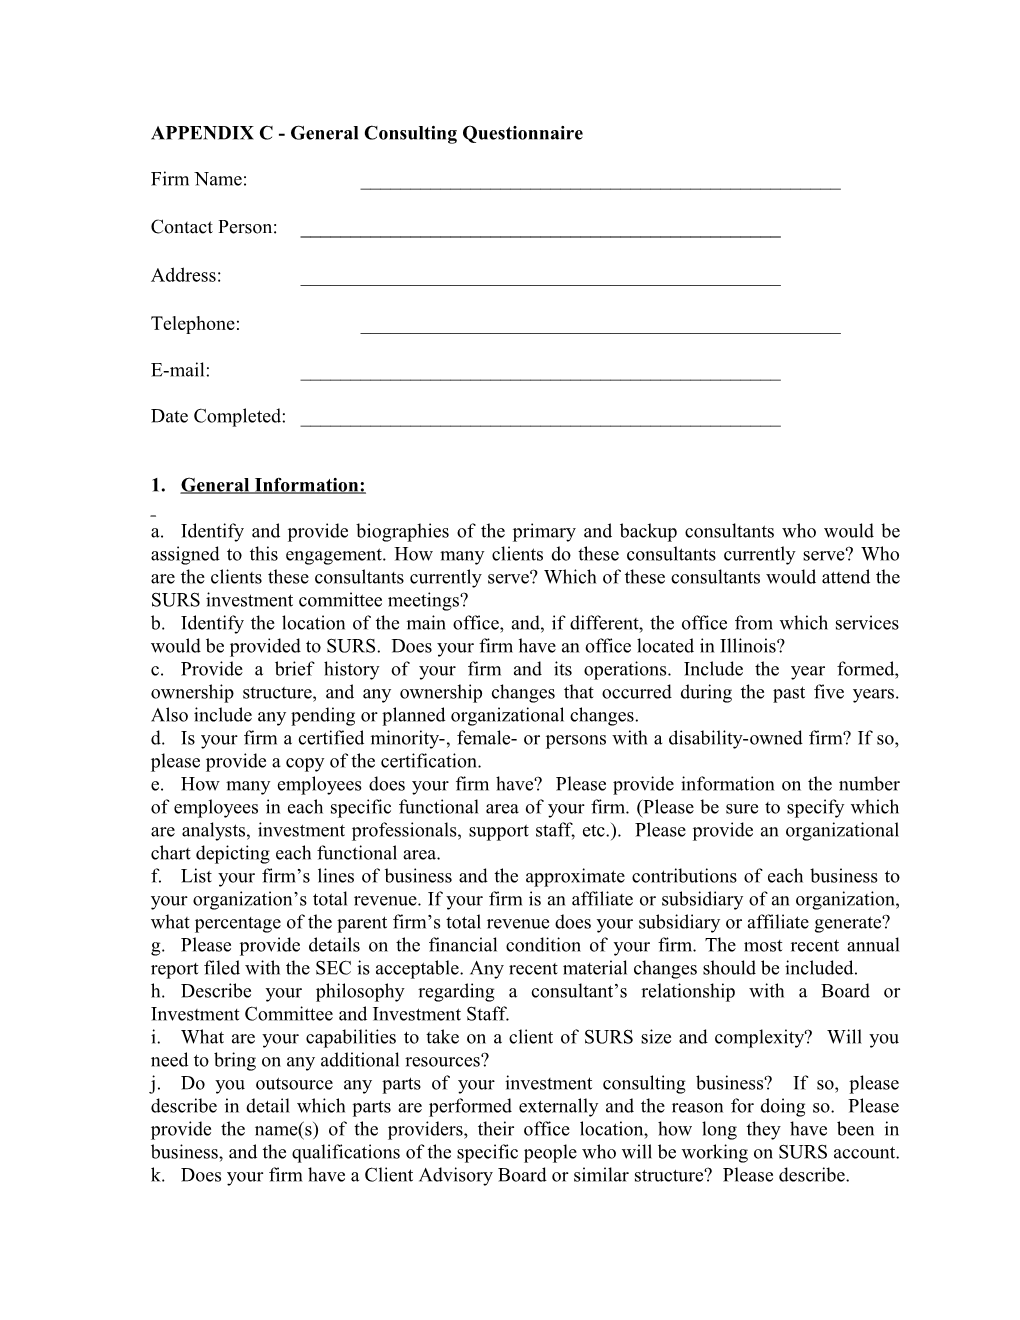 APPENDIX C- General Consulting Questionnaire